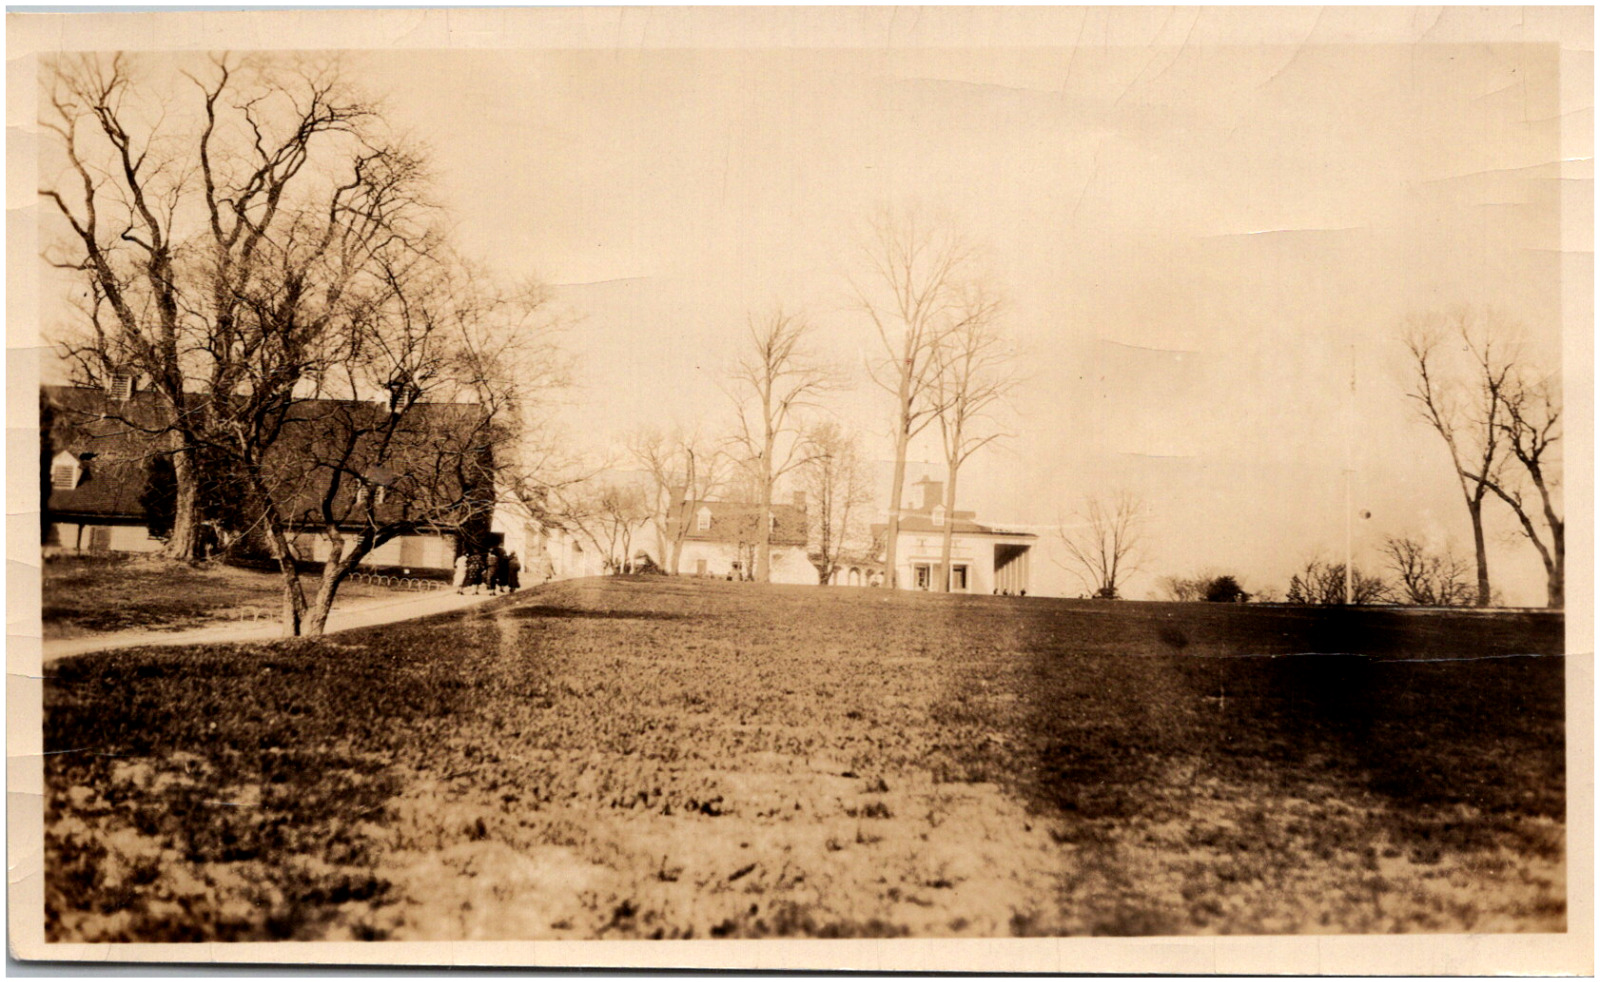 Mount Vernon Plantation Grounds in Virginia VA 1920s Antique Found Photo